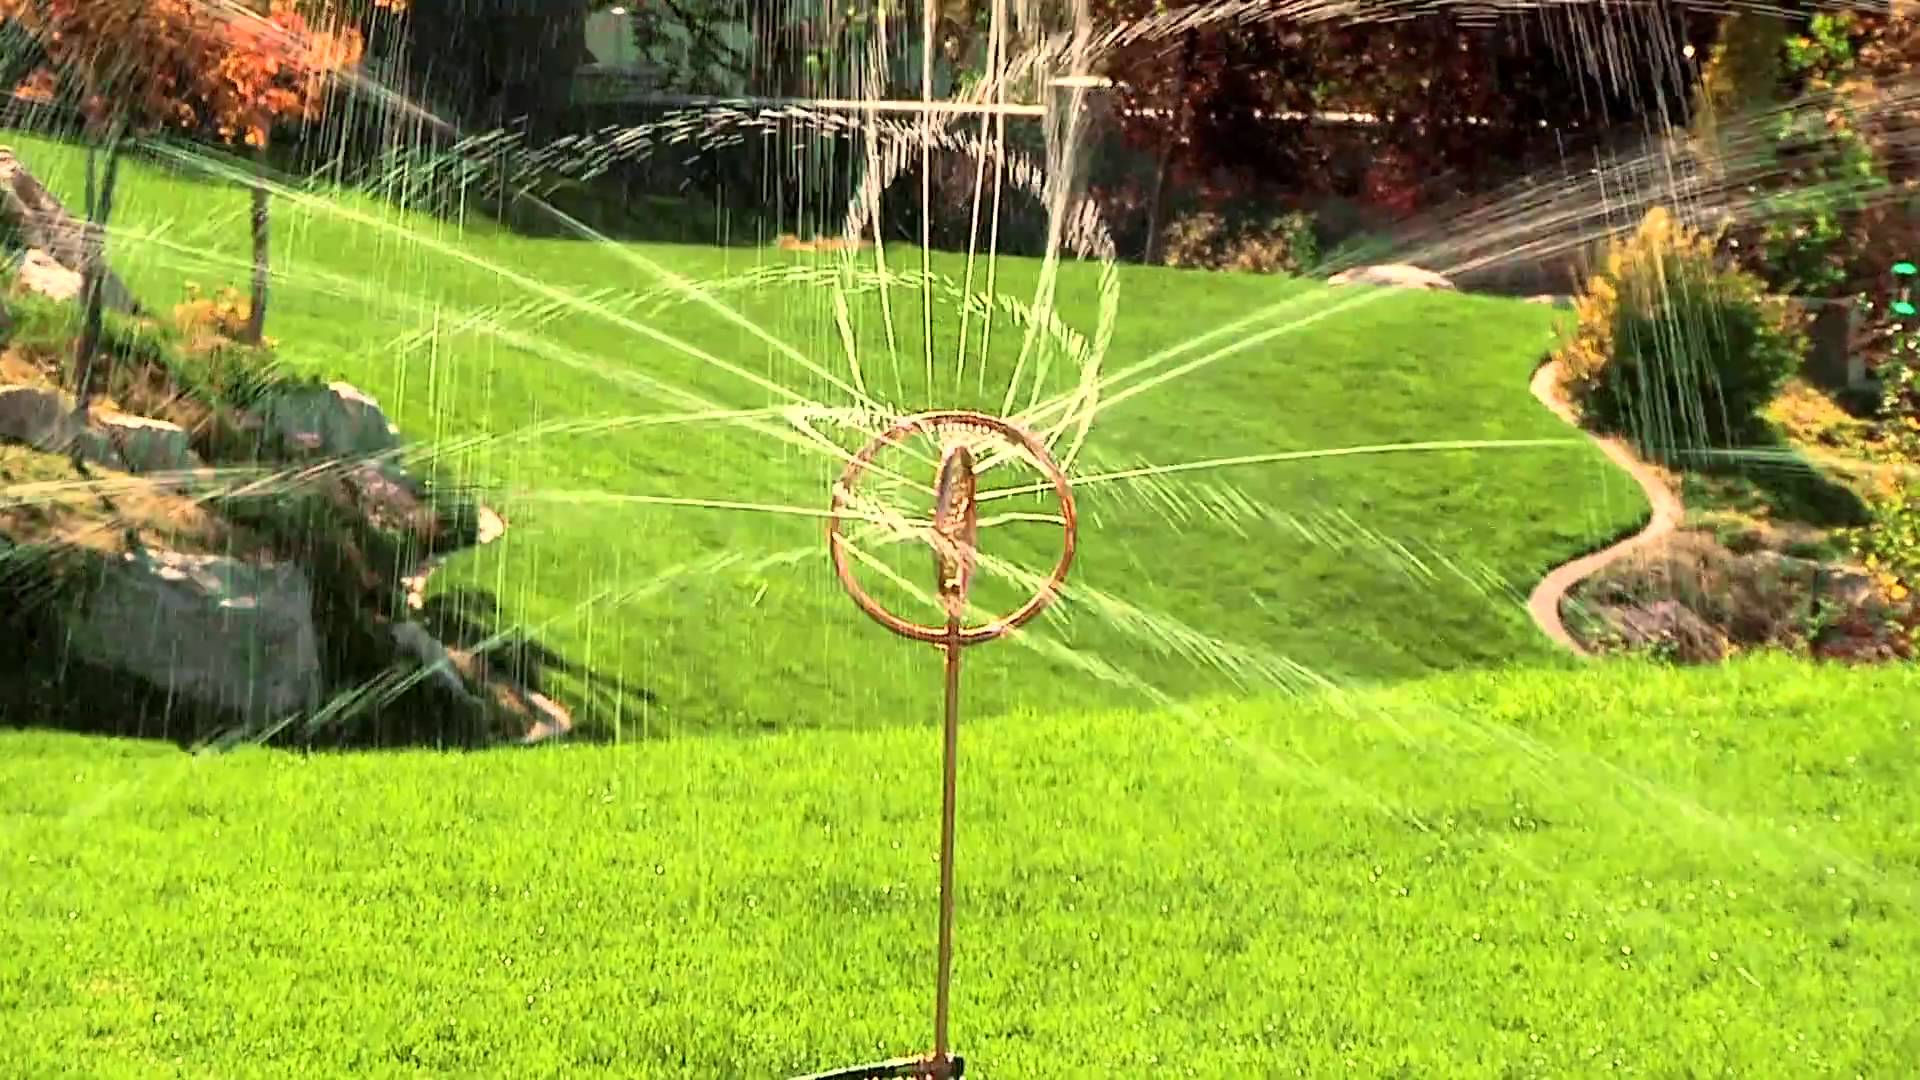 Decorative Spinning Sprinkler by Orbit - YouTube